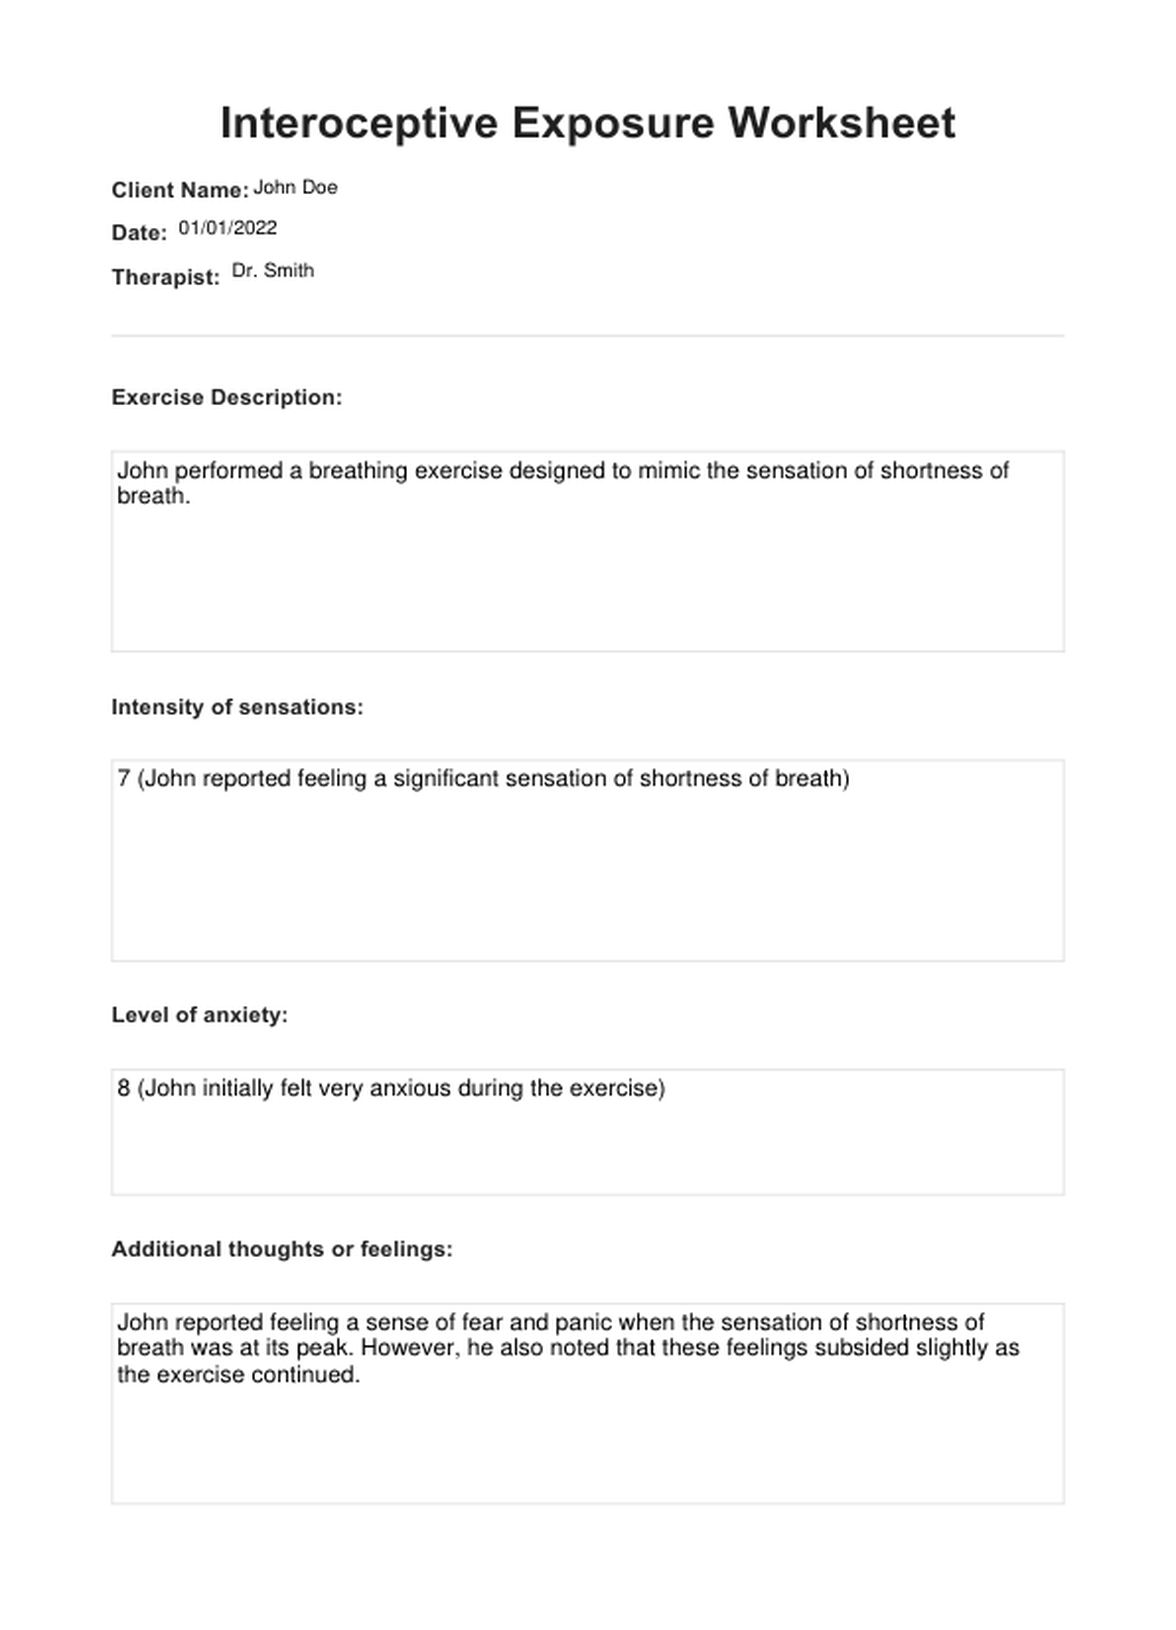 Interoceptive Exposure Worksheet PDF Example